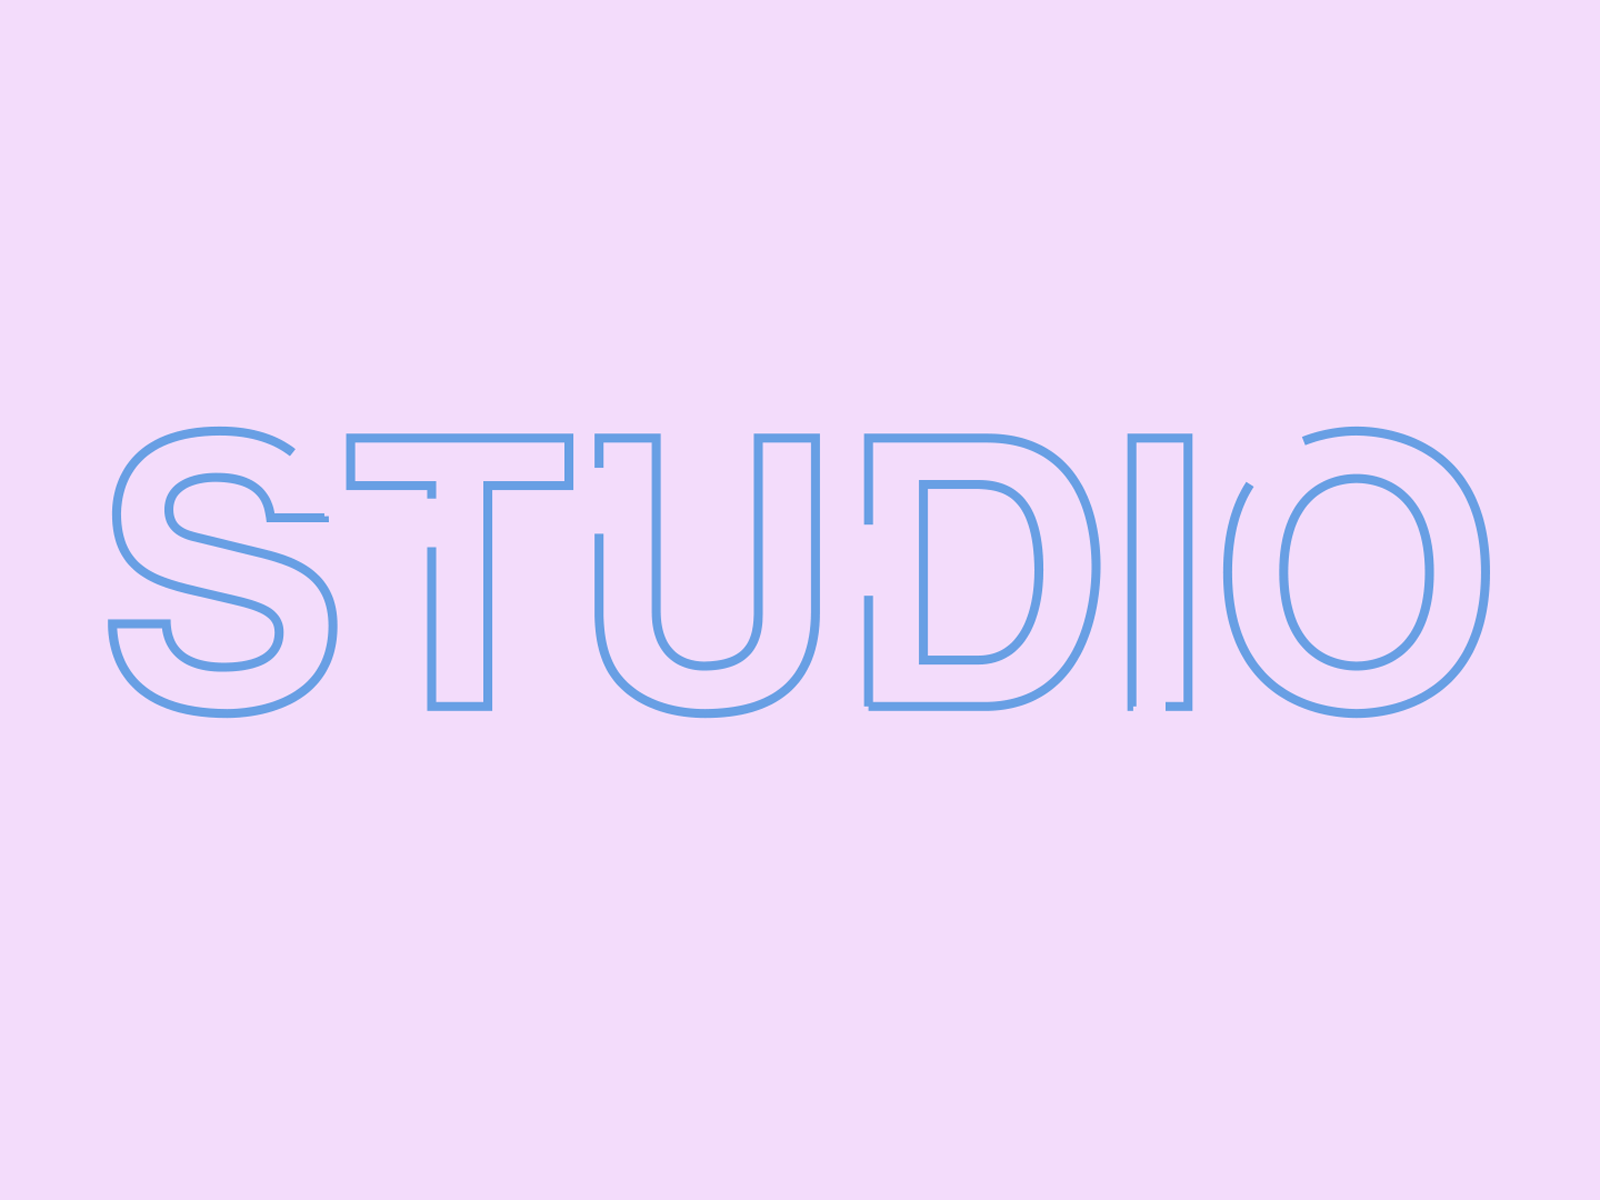 Studio Animation